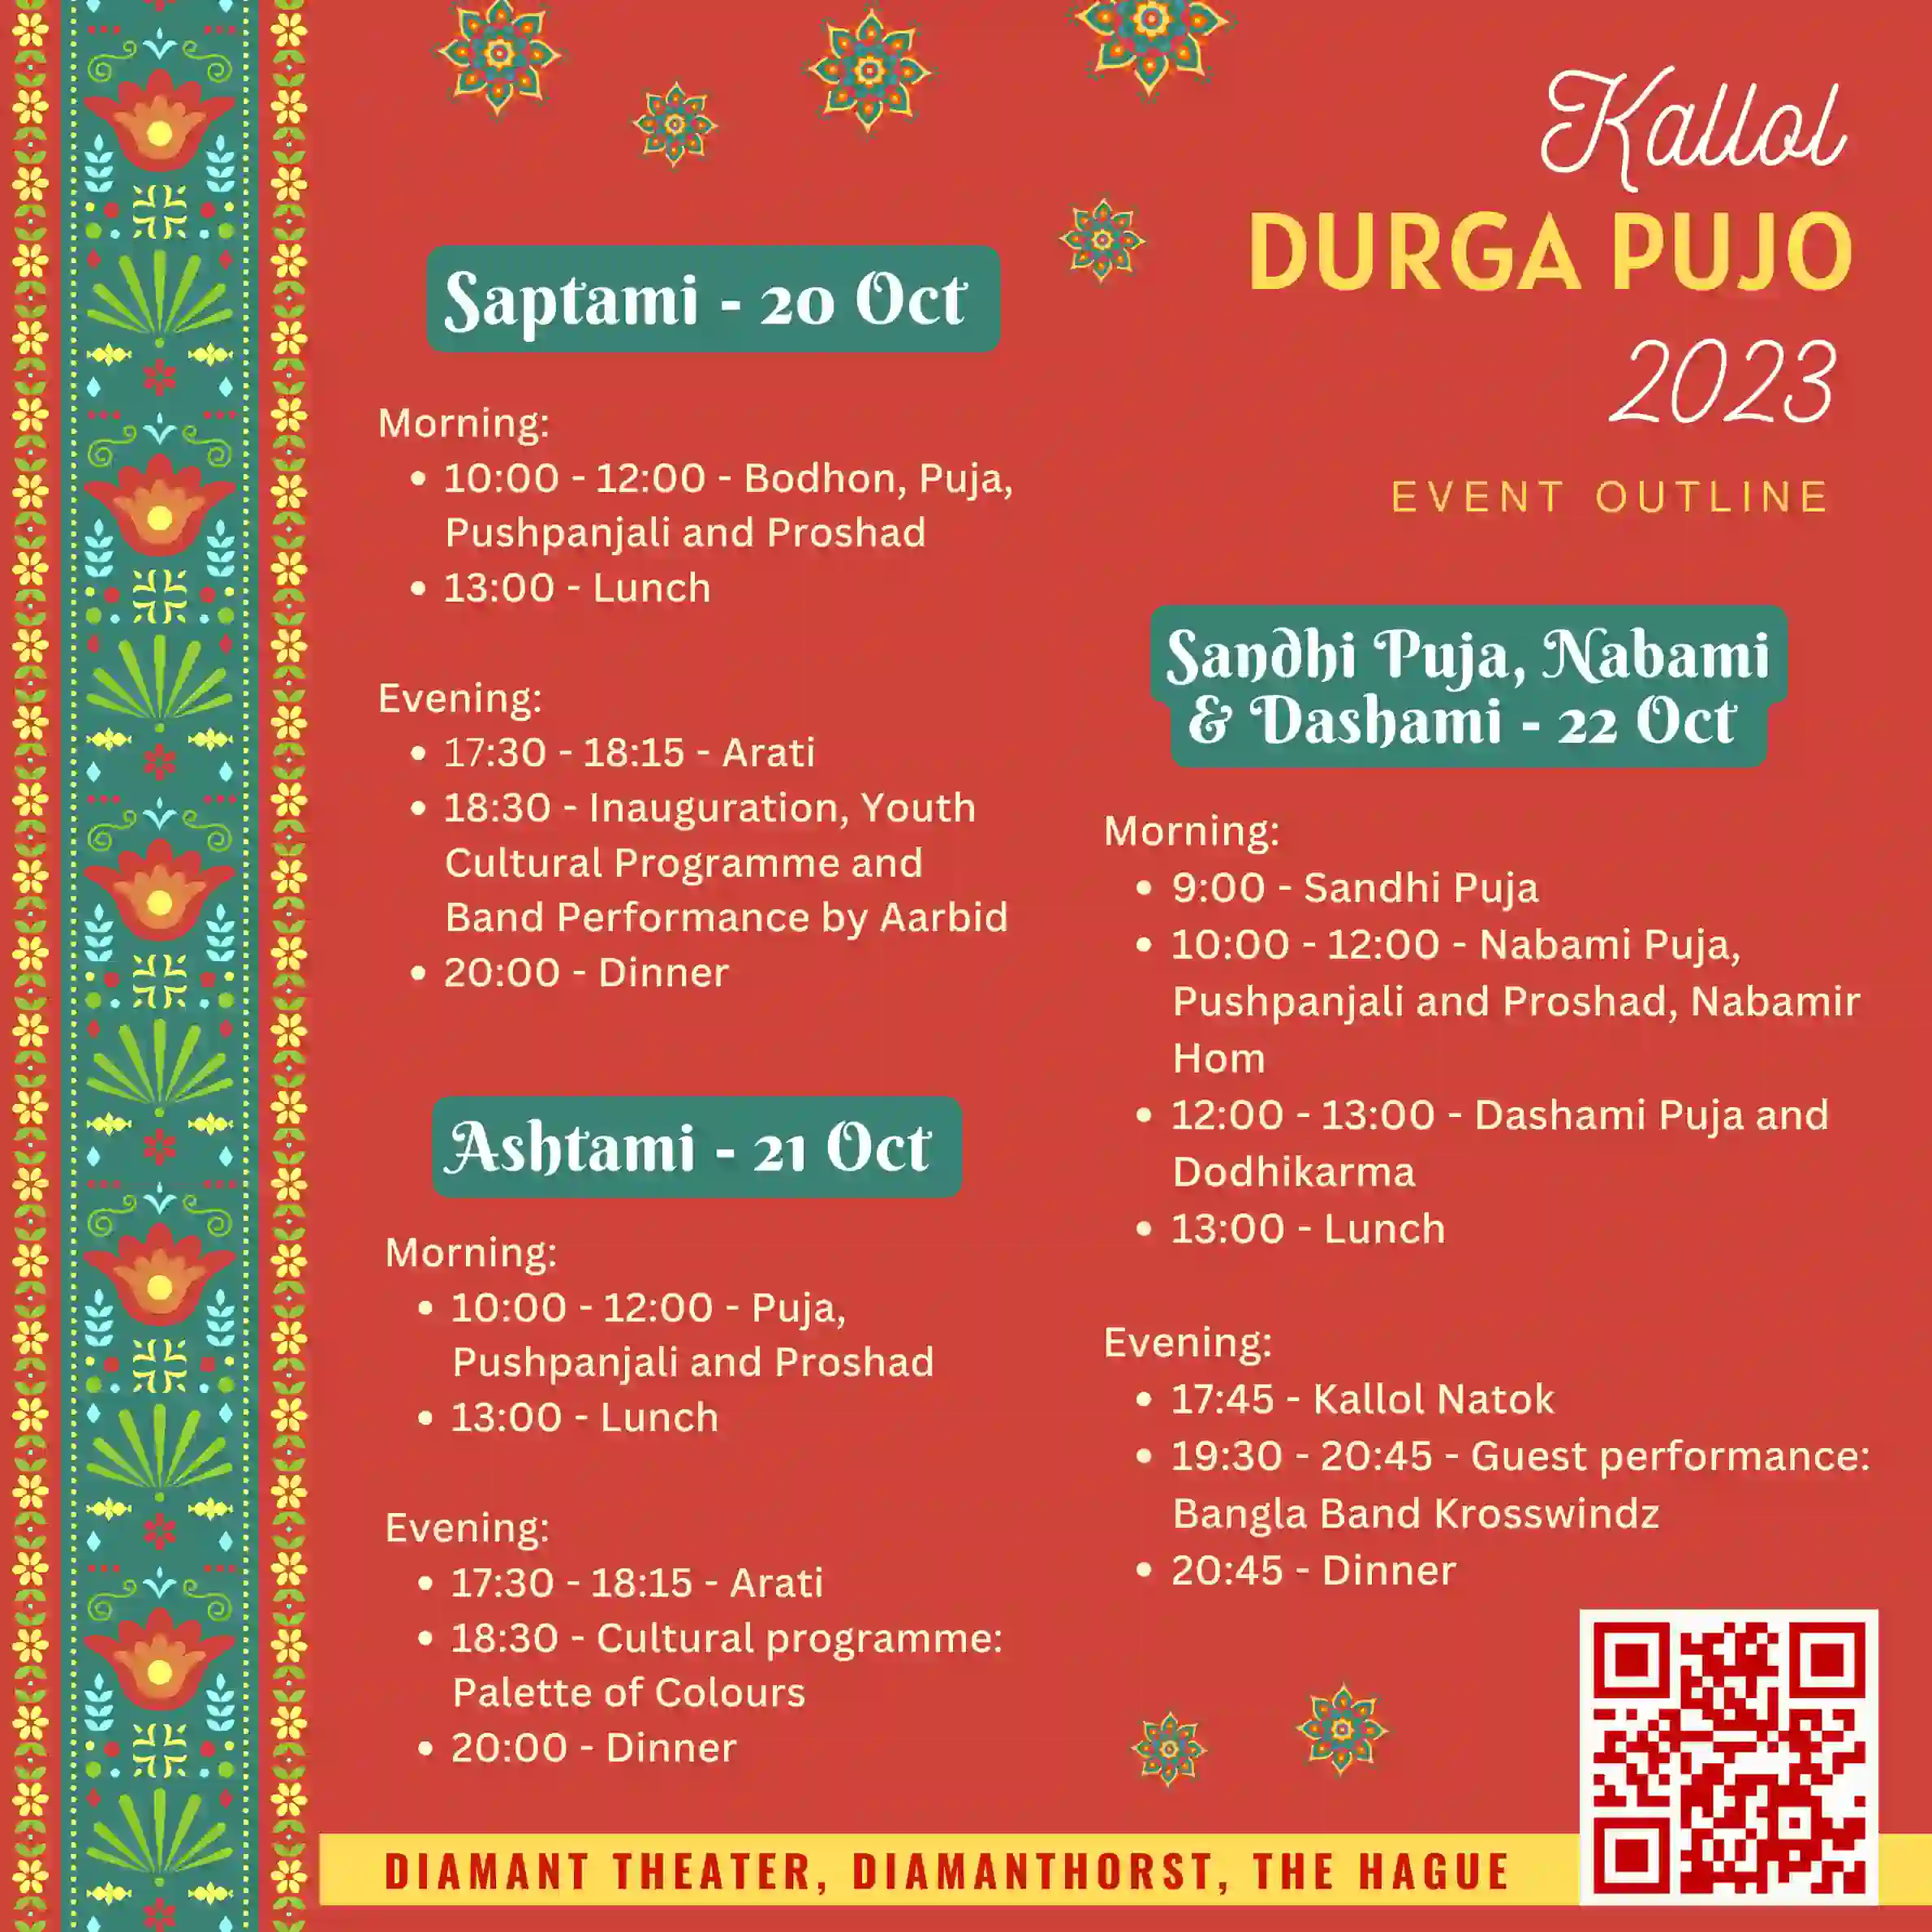 Kallol Durga Pujo 2023 Detailed Programme Schedule Outline